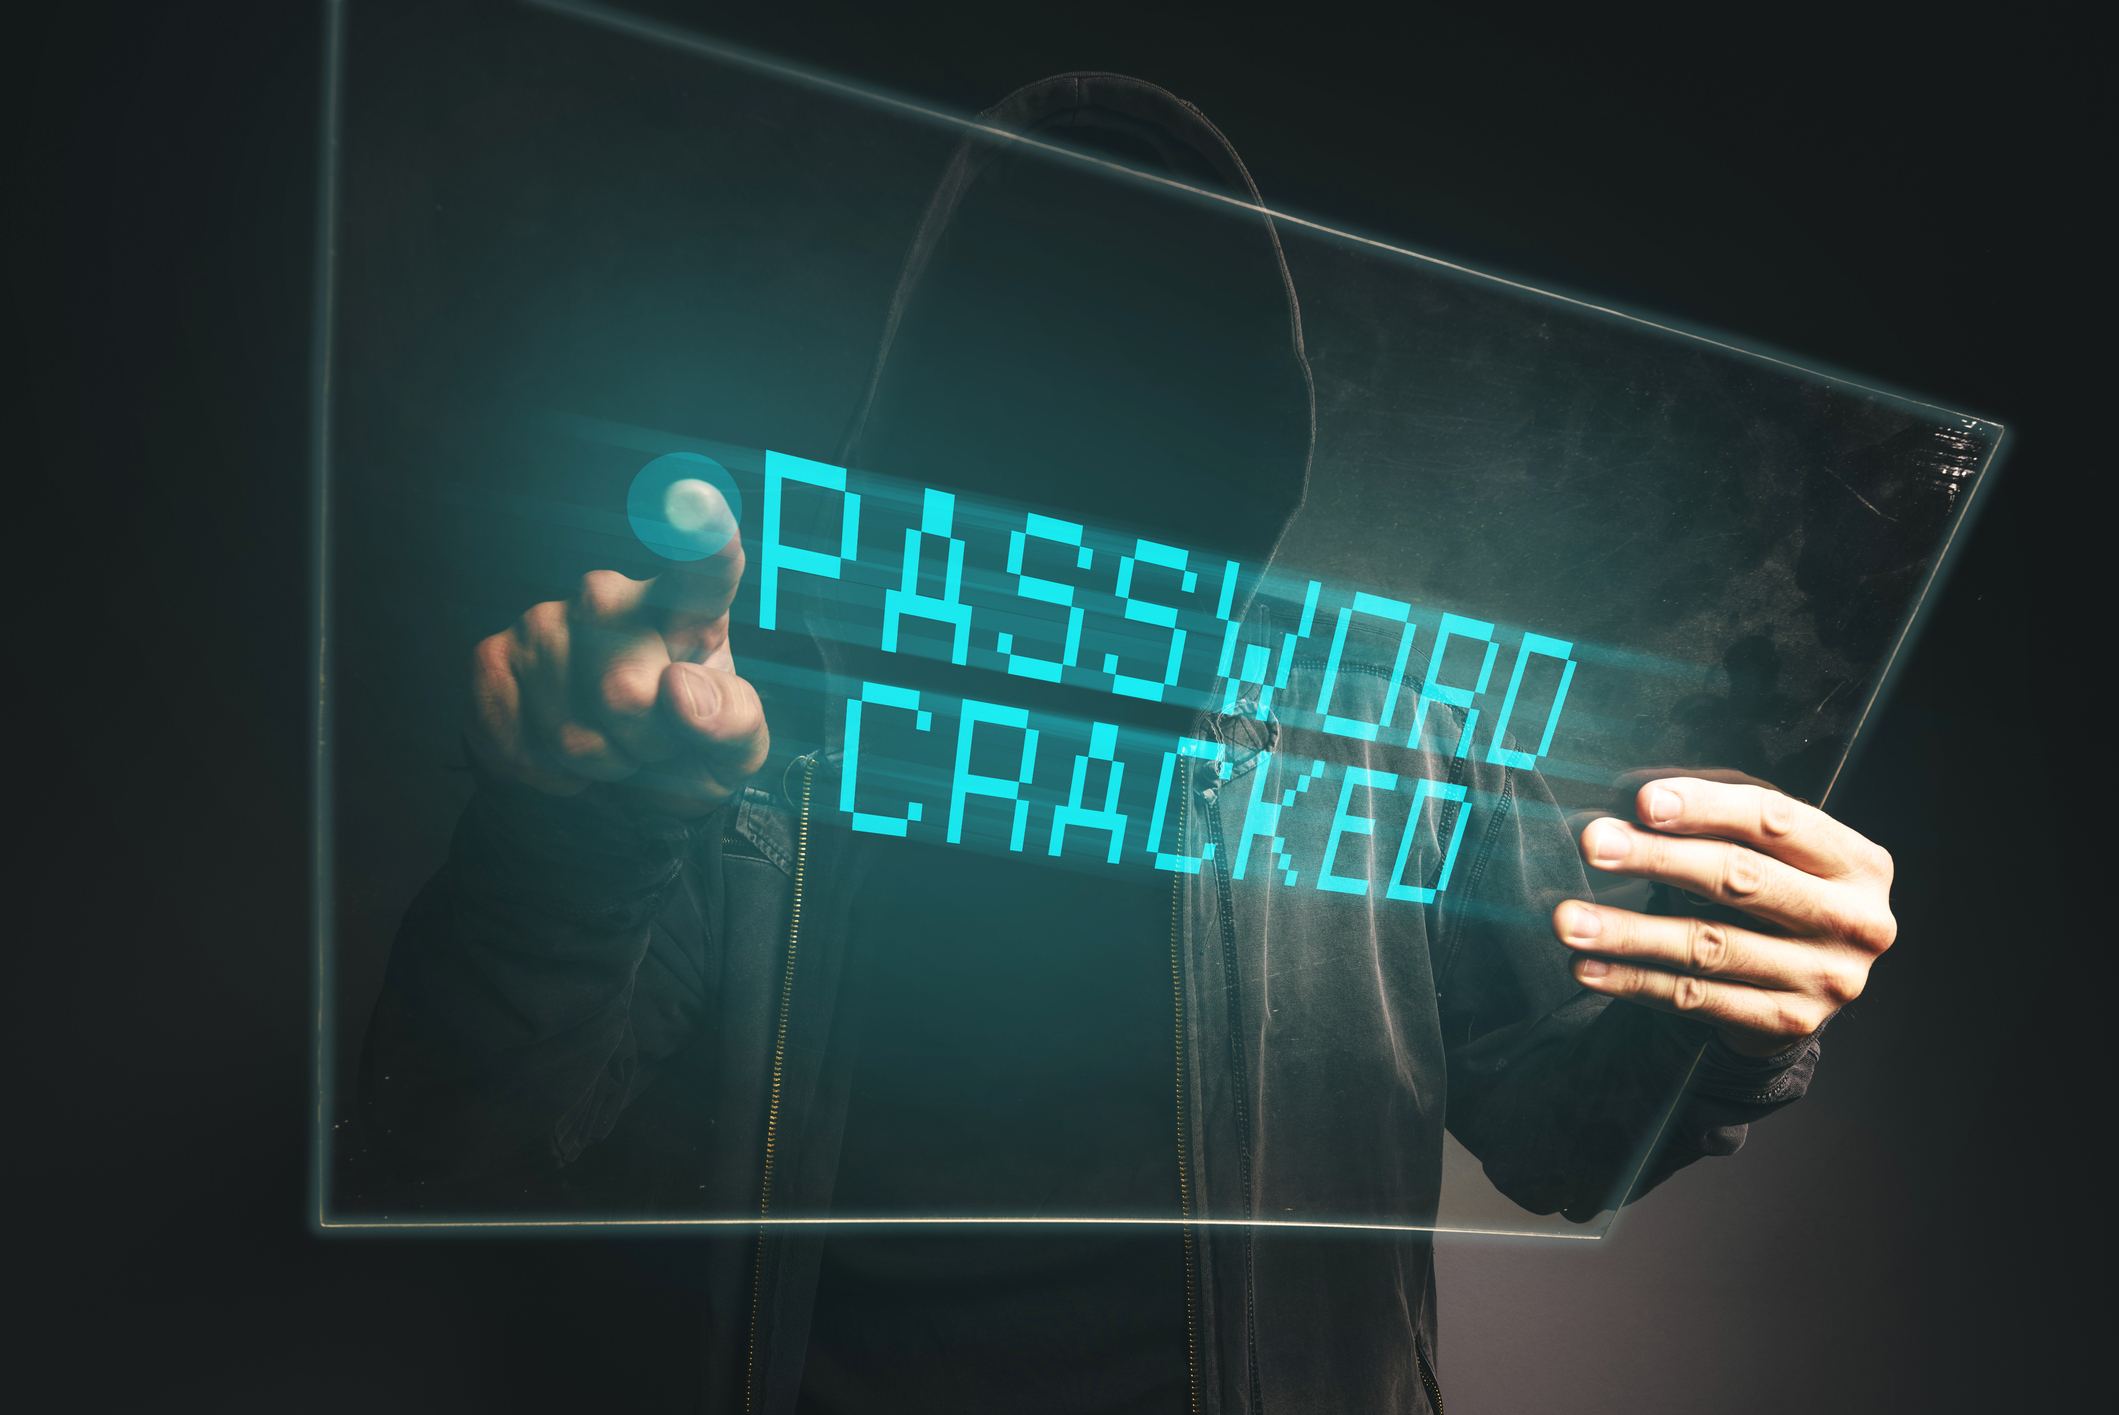 Password Cracking